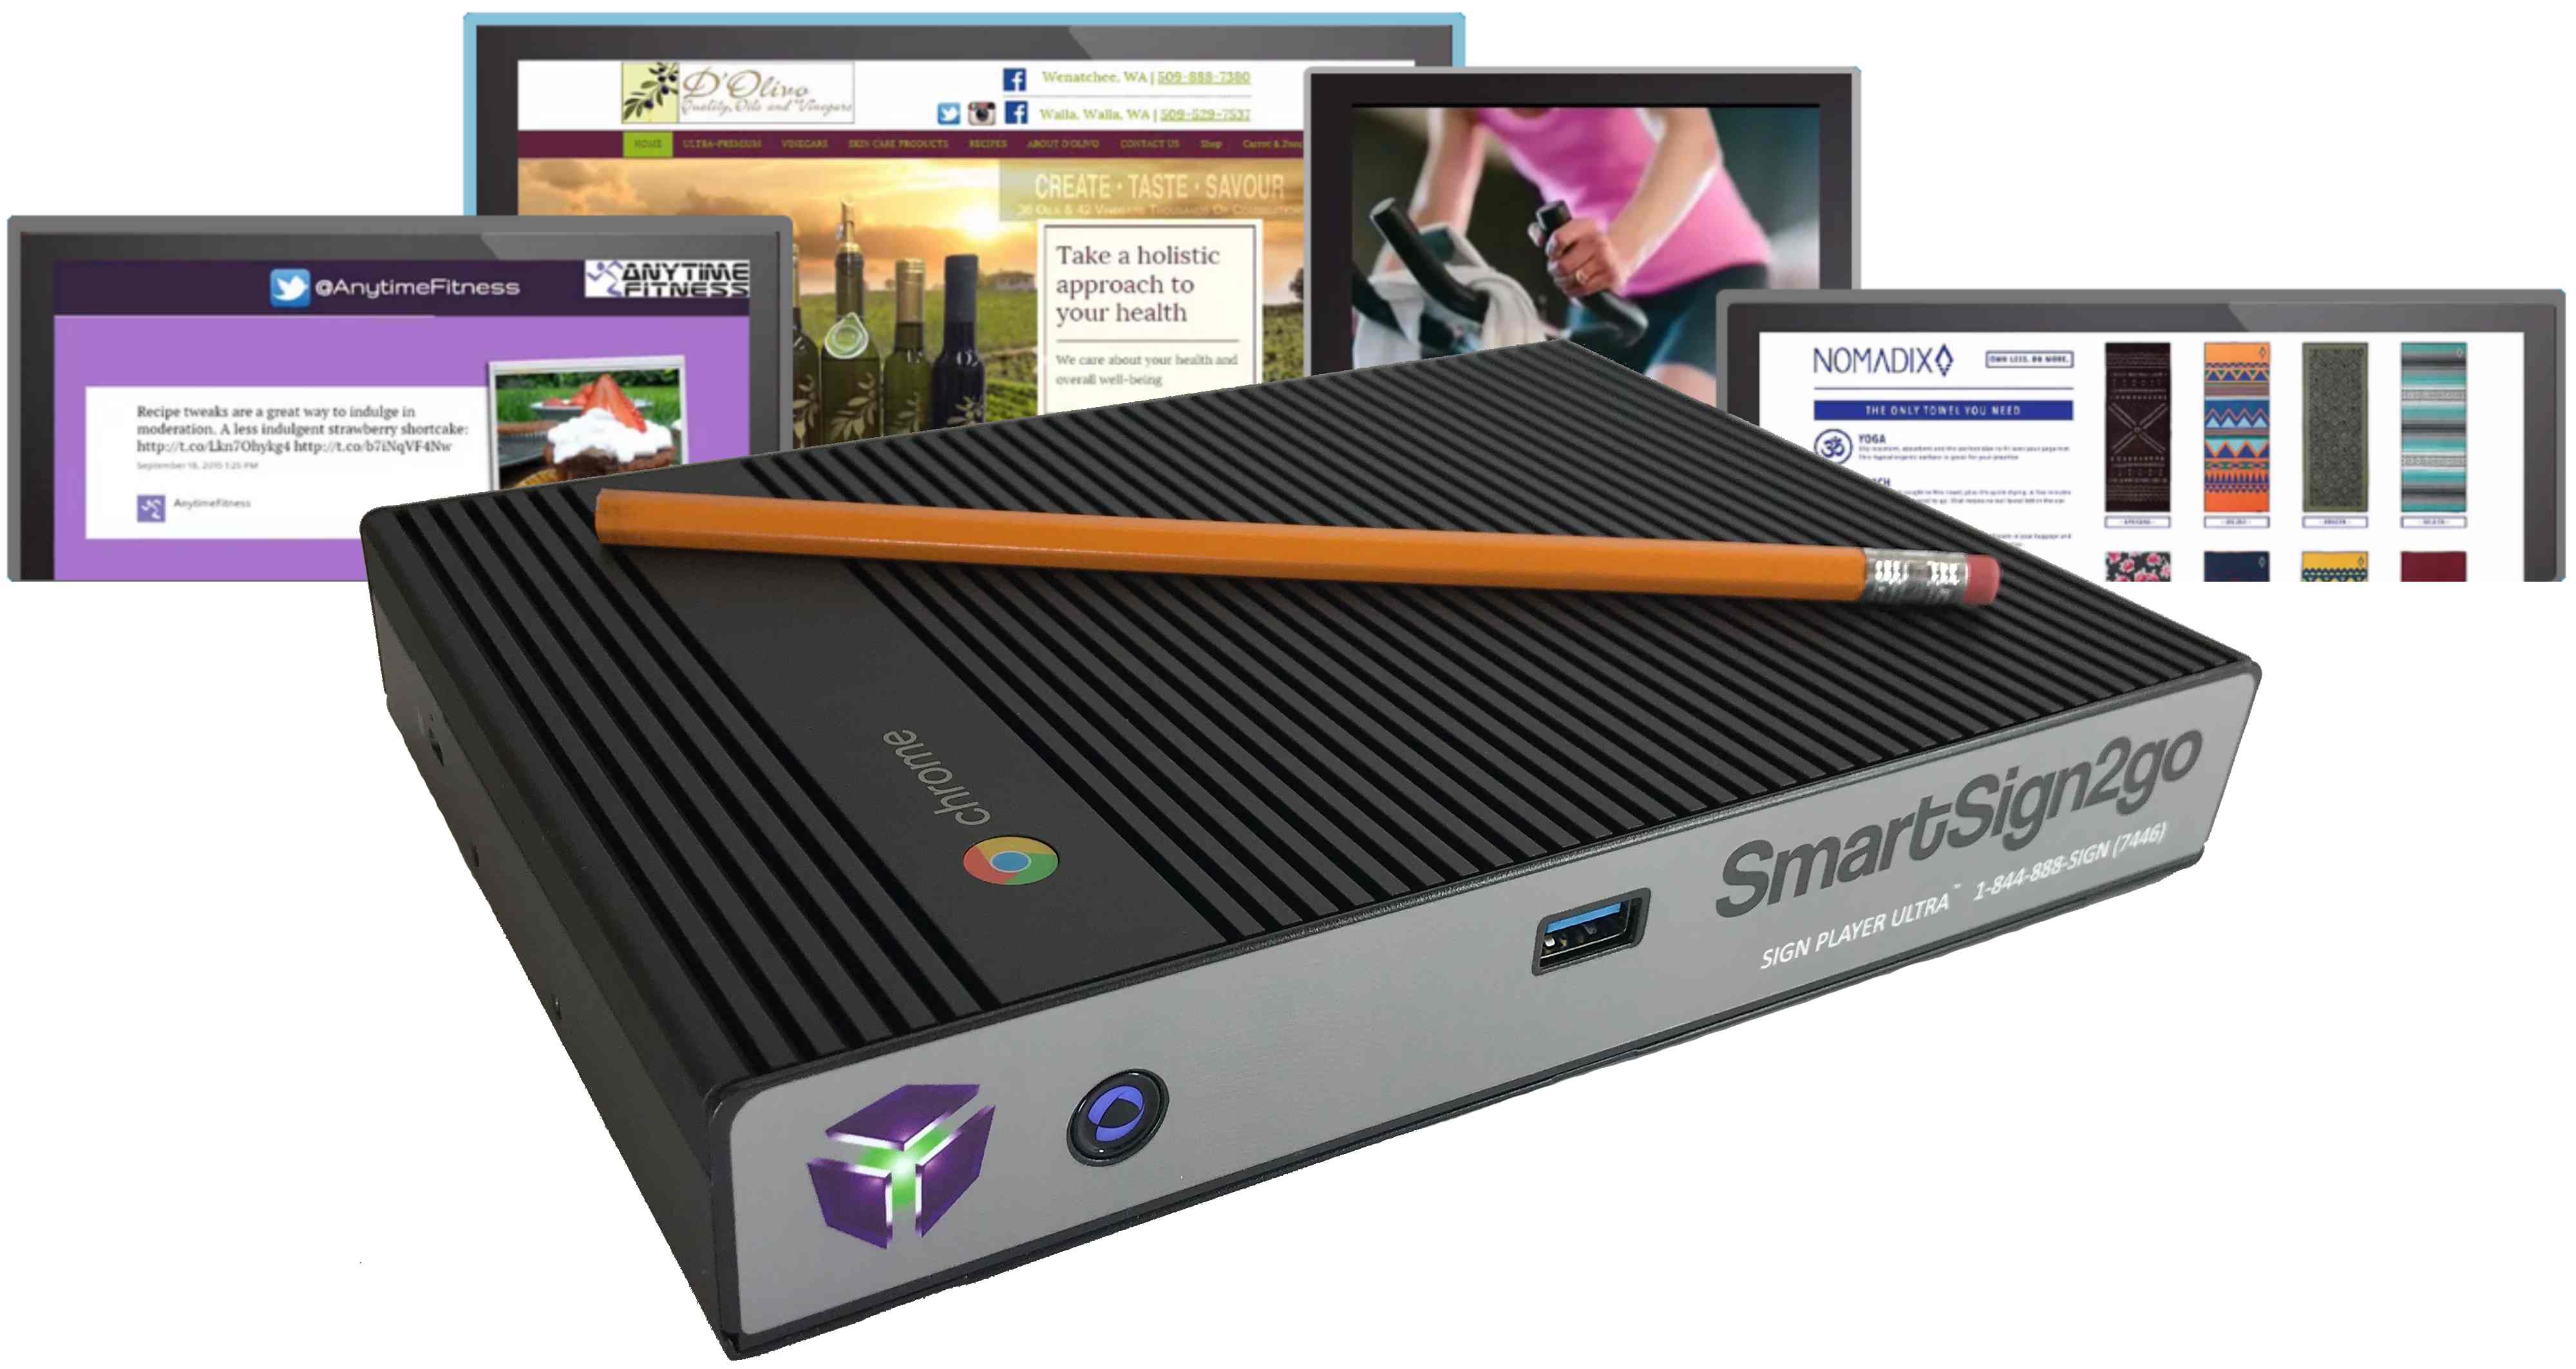 Smart Digital Signage Player UltraHD with Design SmartSign2go